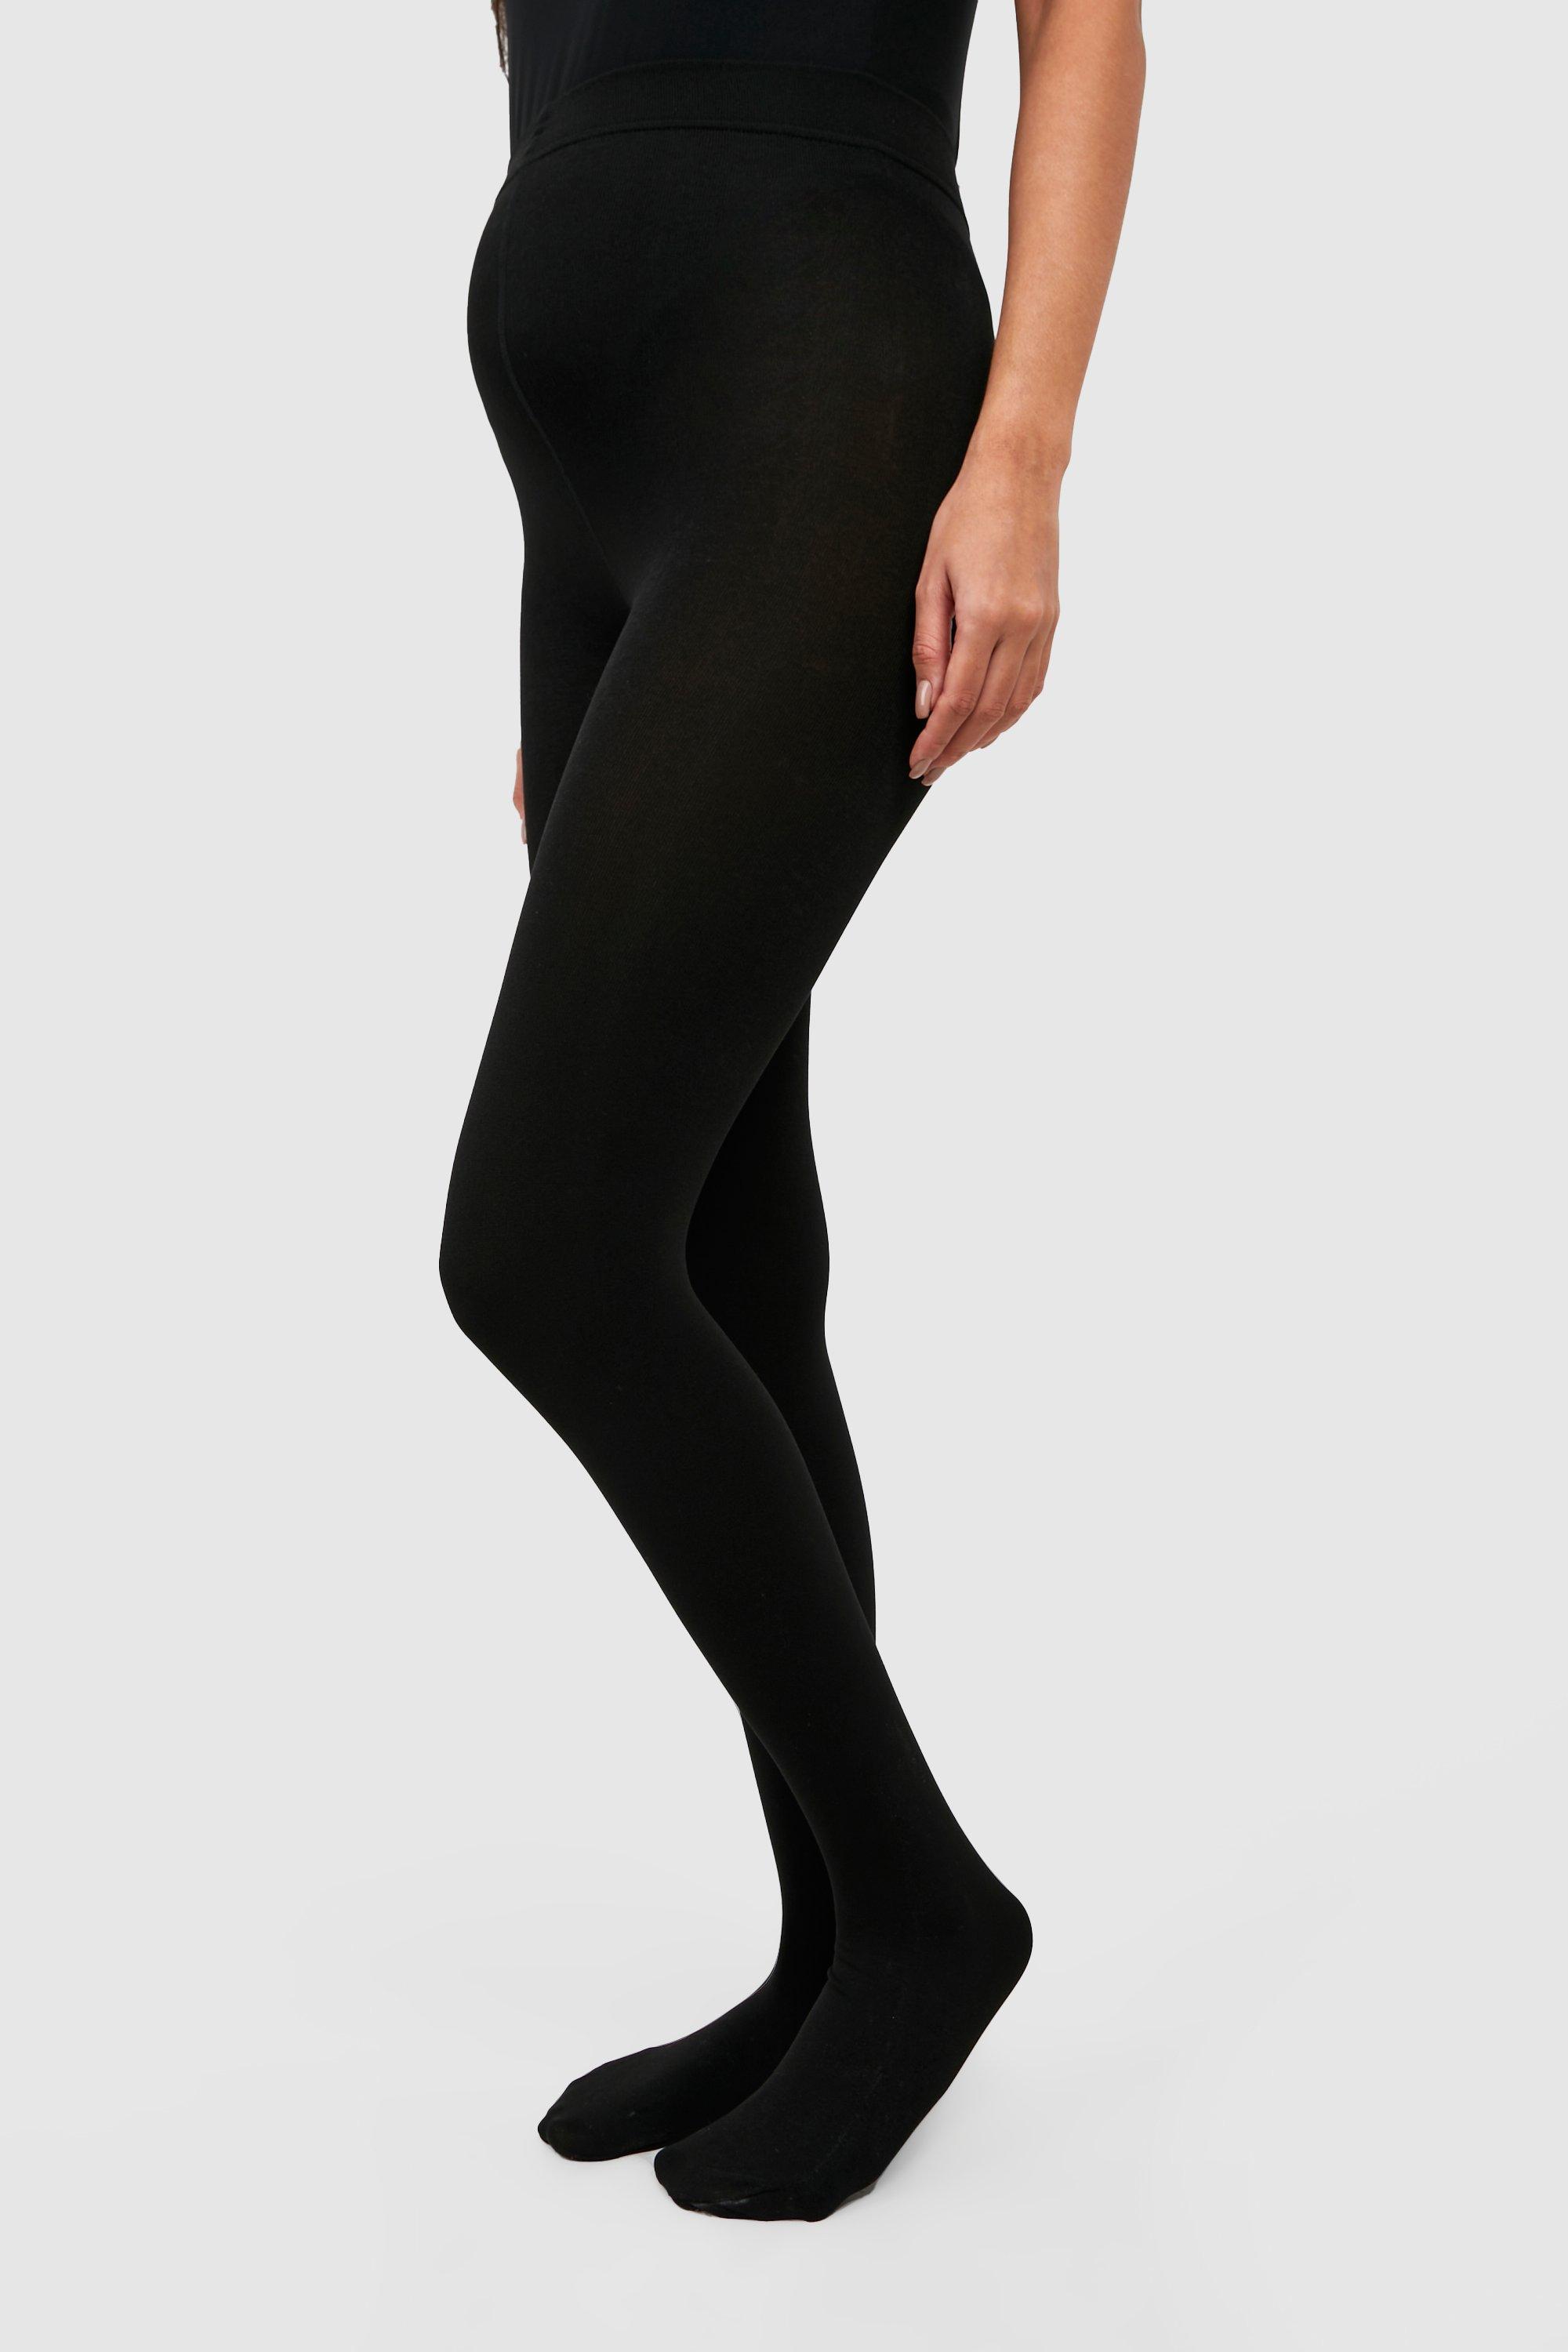 https://media.boohoo.com/i/boohoo/gzz35567_black_xl_2/female-black-maternity-thermal-fleece-tights